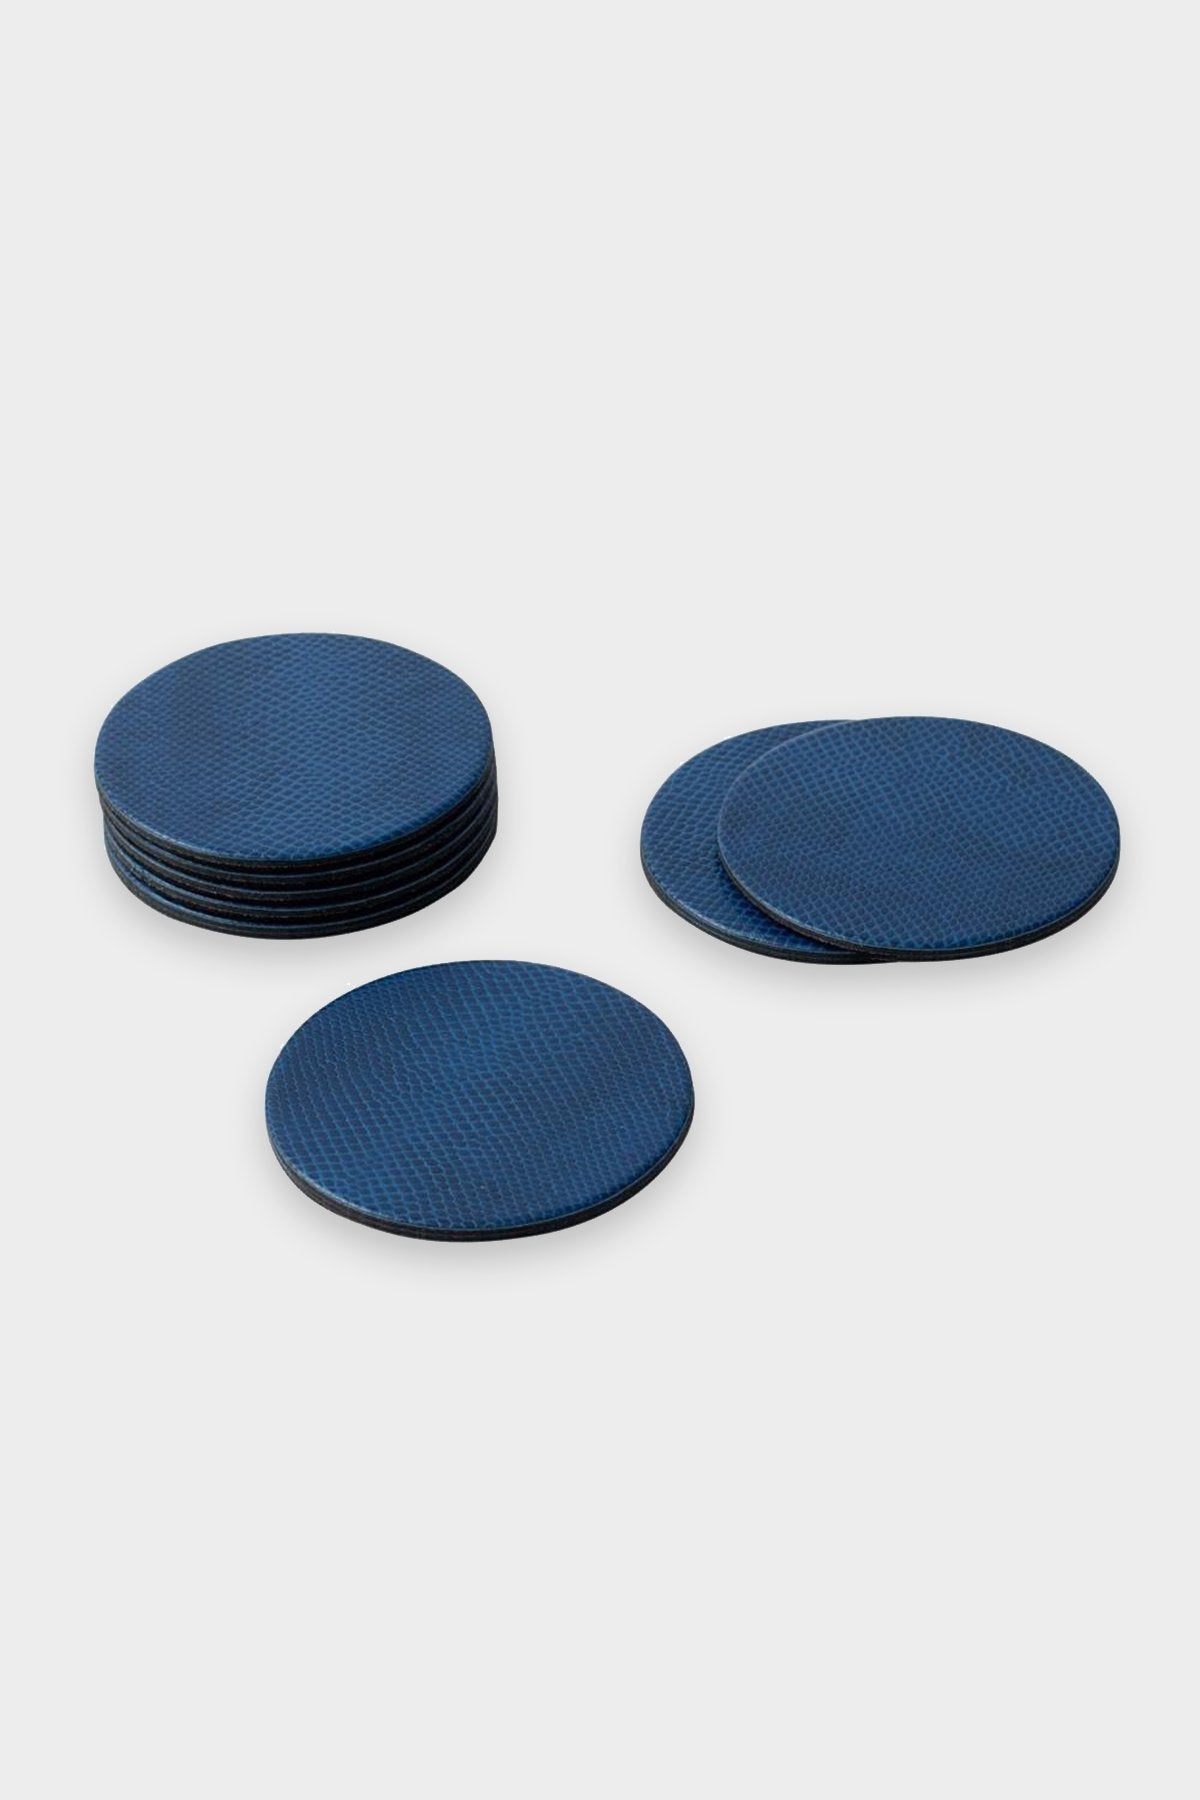 Round Snakeskin Felt-Backed Coasters in Navy Blue - 8 Per Box - shop-olivia.com